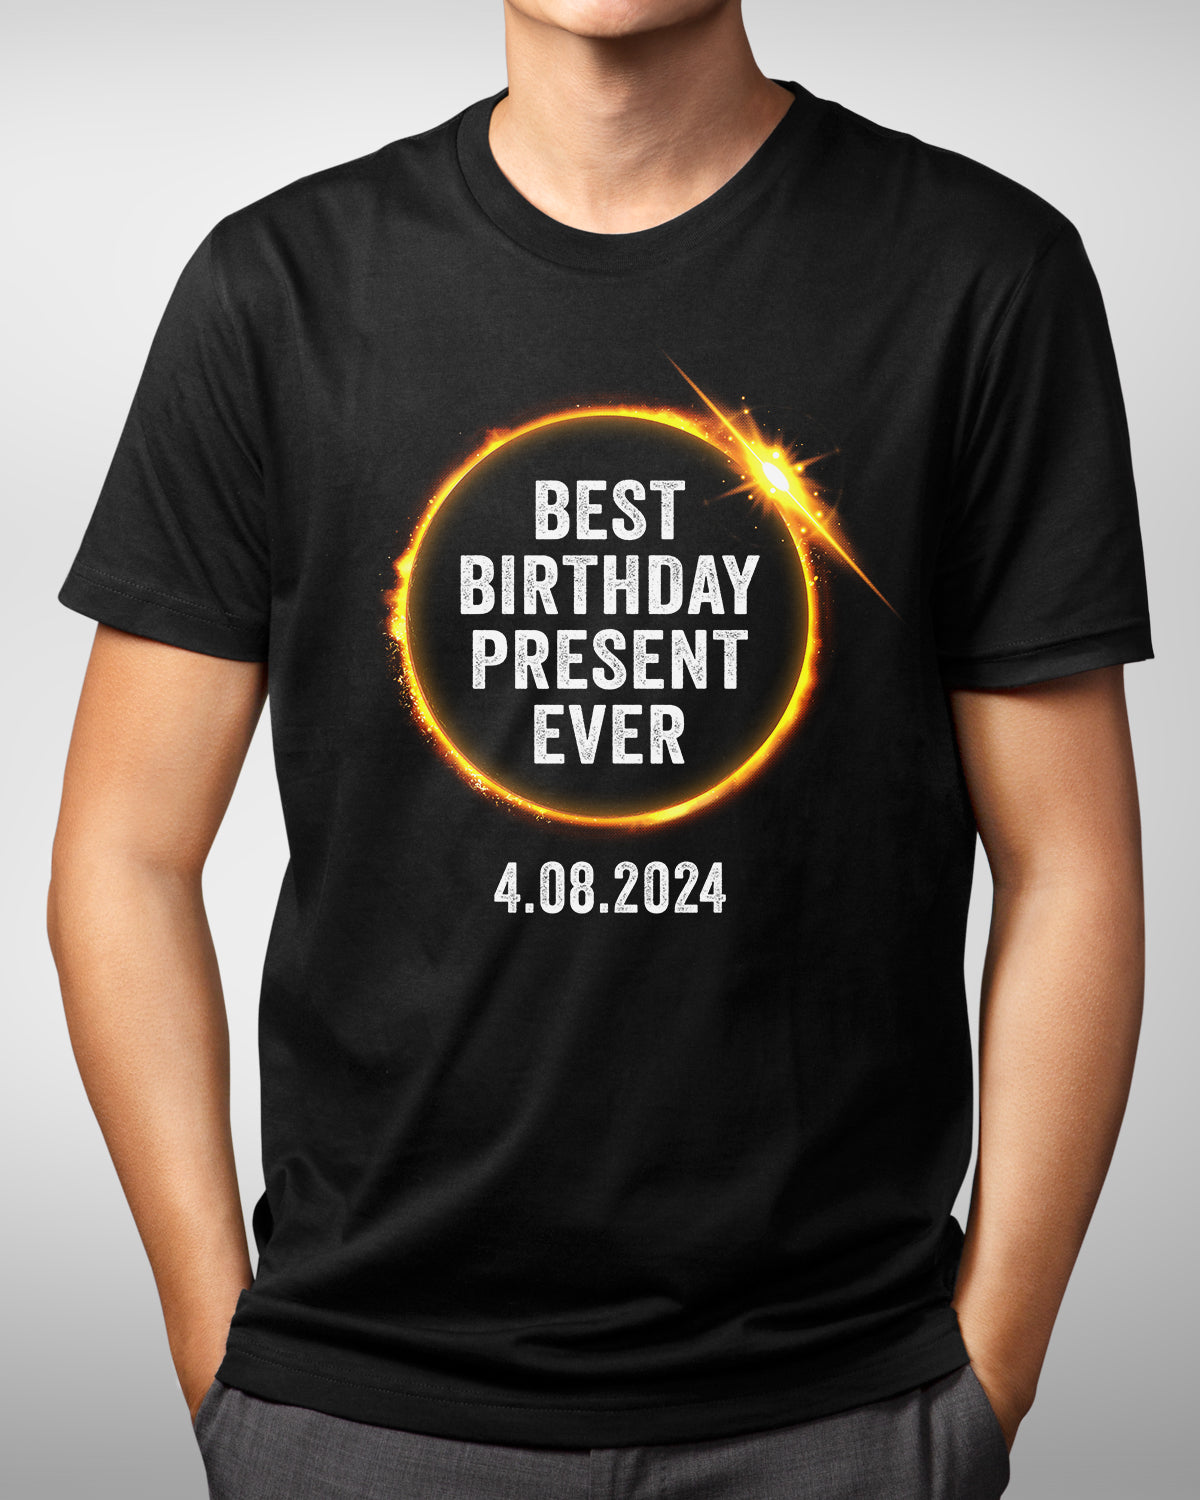 Best Birthday Present Ever Shirt - April 8 2024 - Total Solar Eclipse Cosmic Birthday